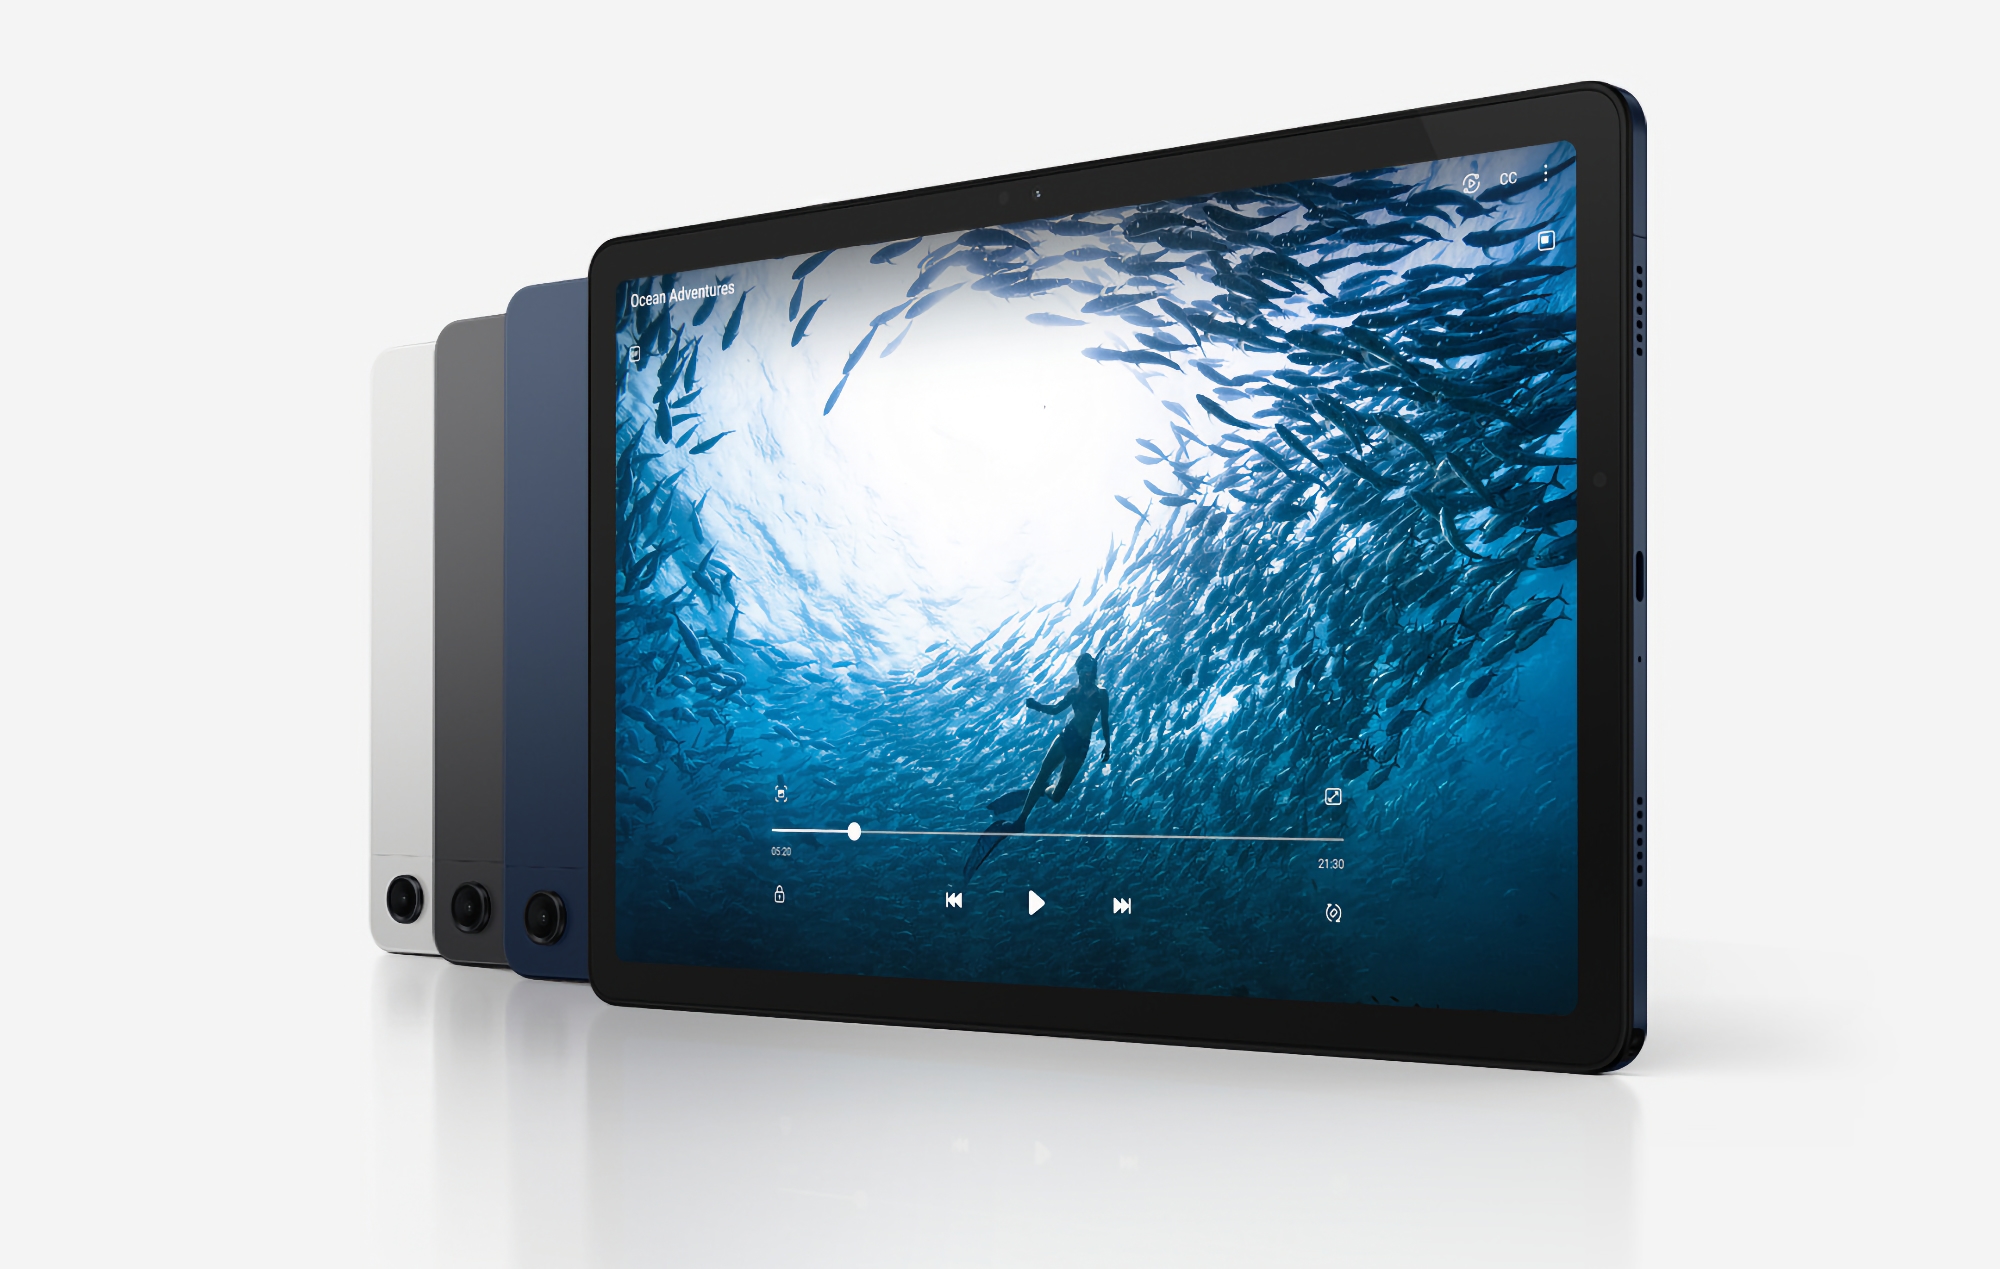 Obniżka o 30 dolarów: Samsung obniżył cenę Galaxy Tab A9+